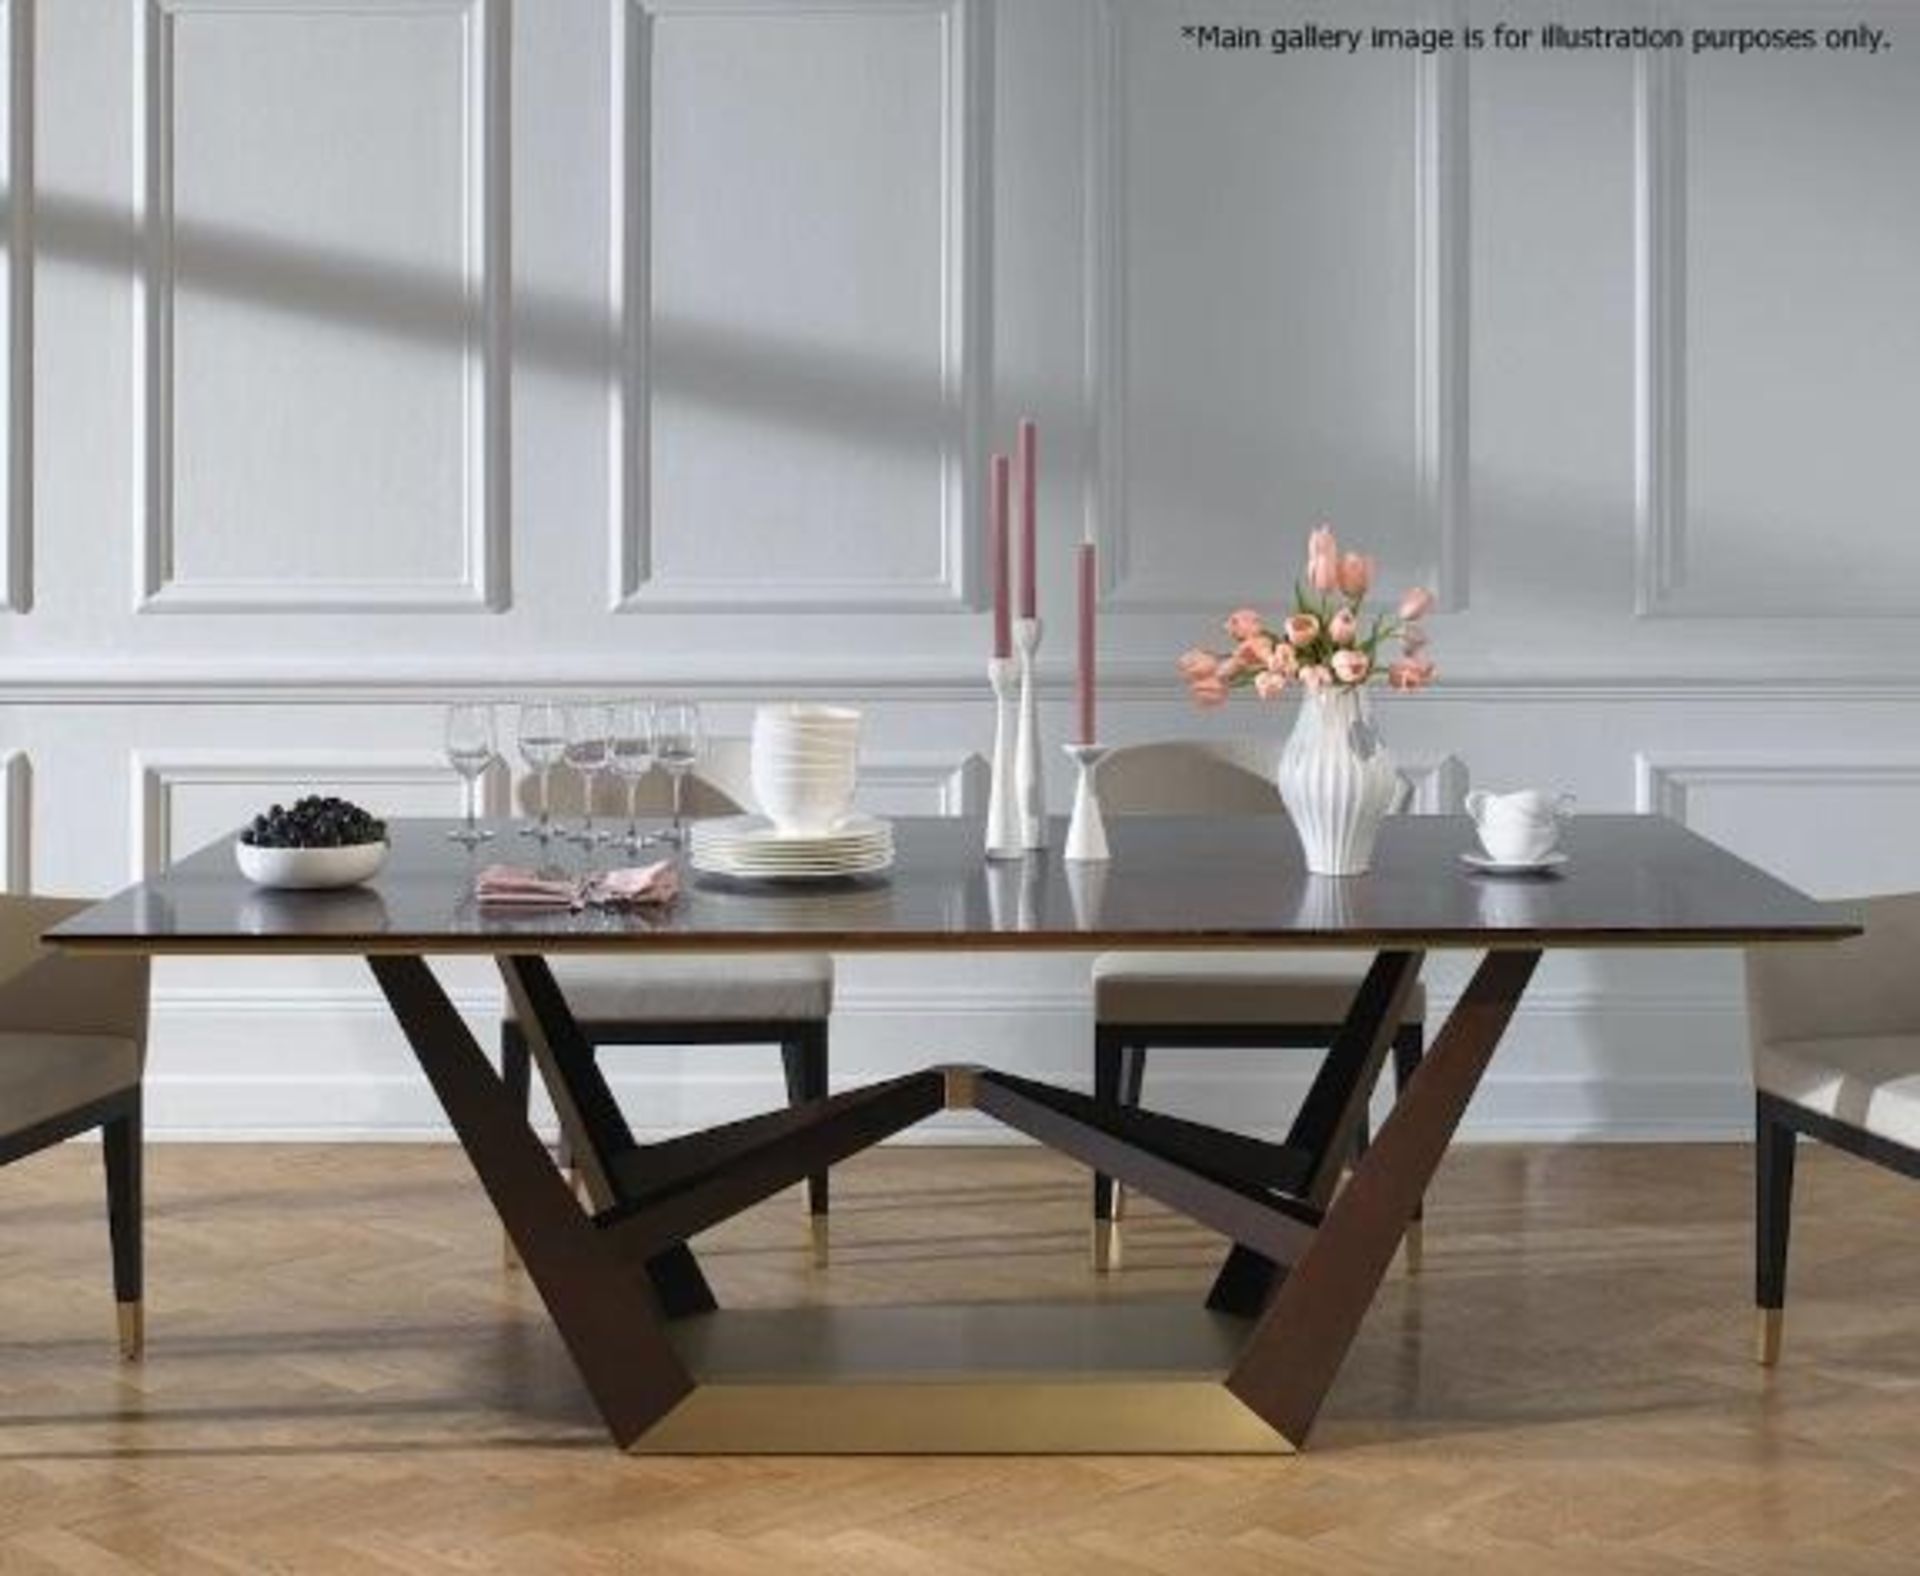 1 x PORADA Ellington Dining Table (Base Only) - Ref: 5568978 - Dimensions: W160 x D88 x H71cm - CL01